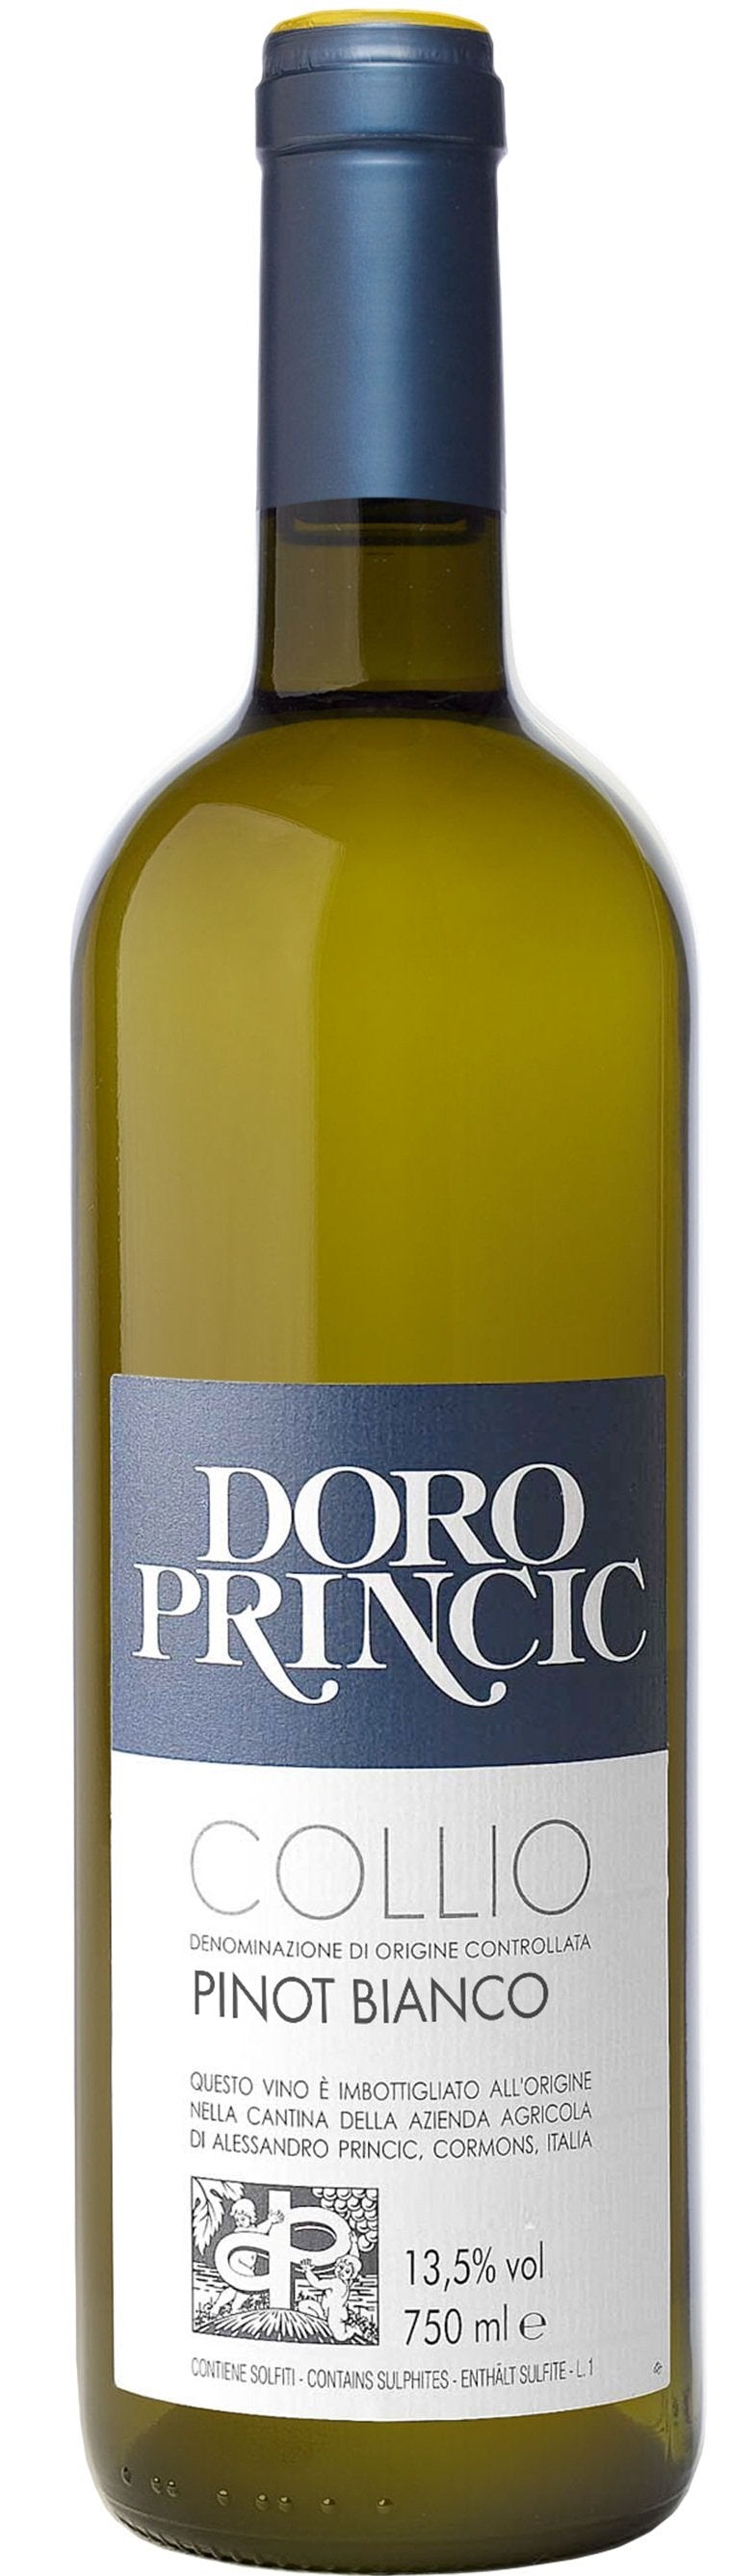 Doro Princic Pinot Bianco 2014